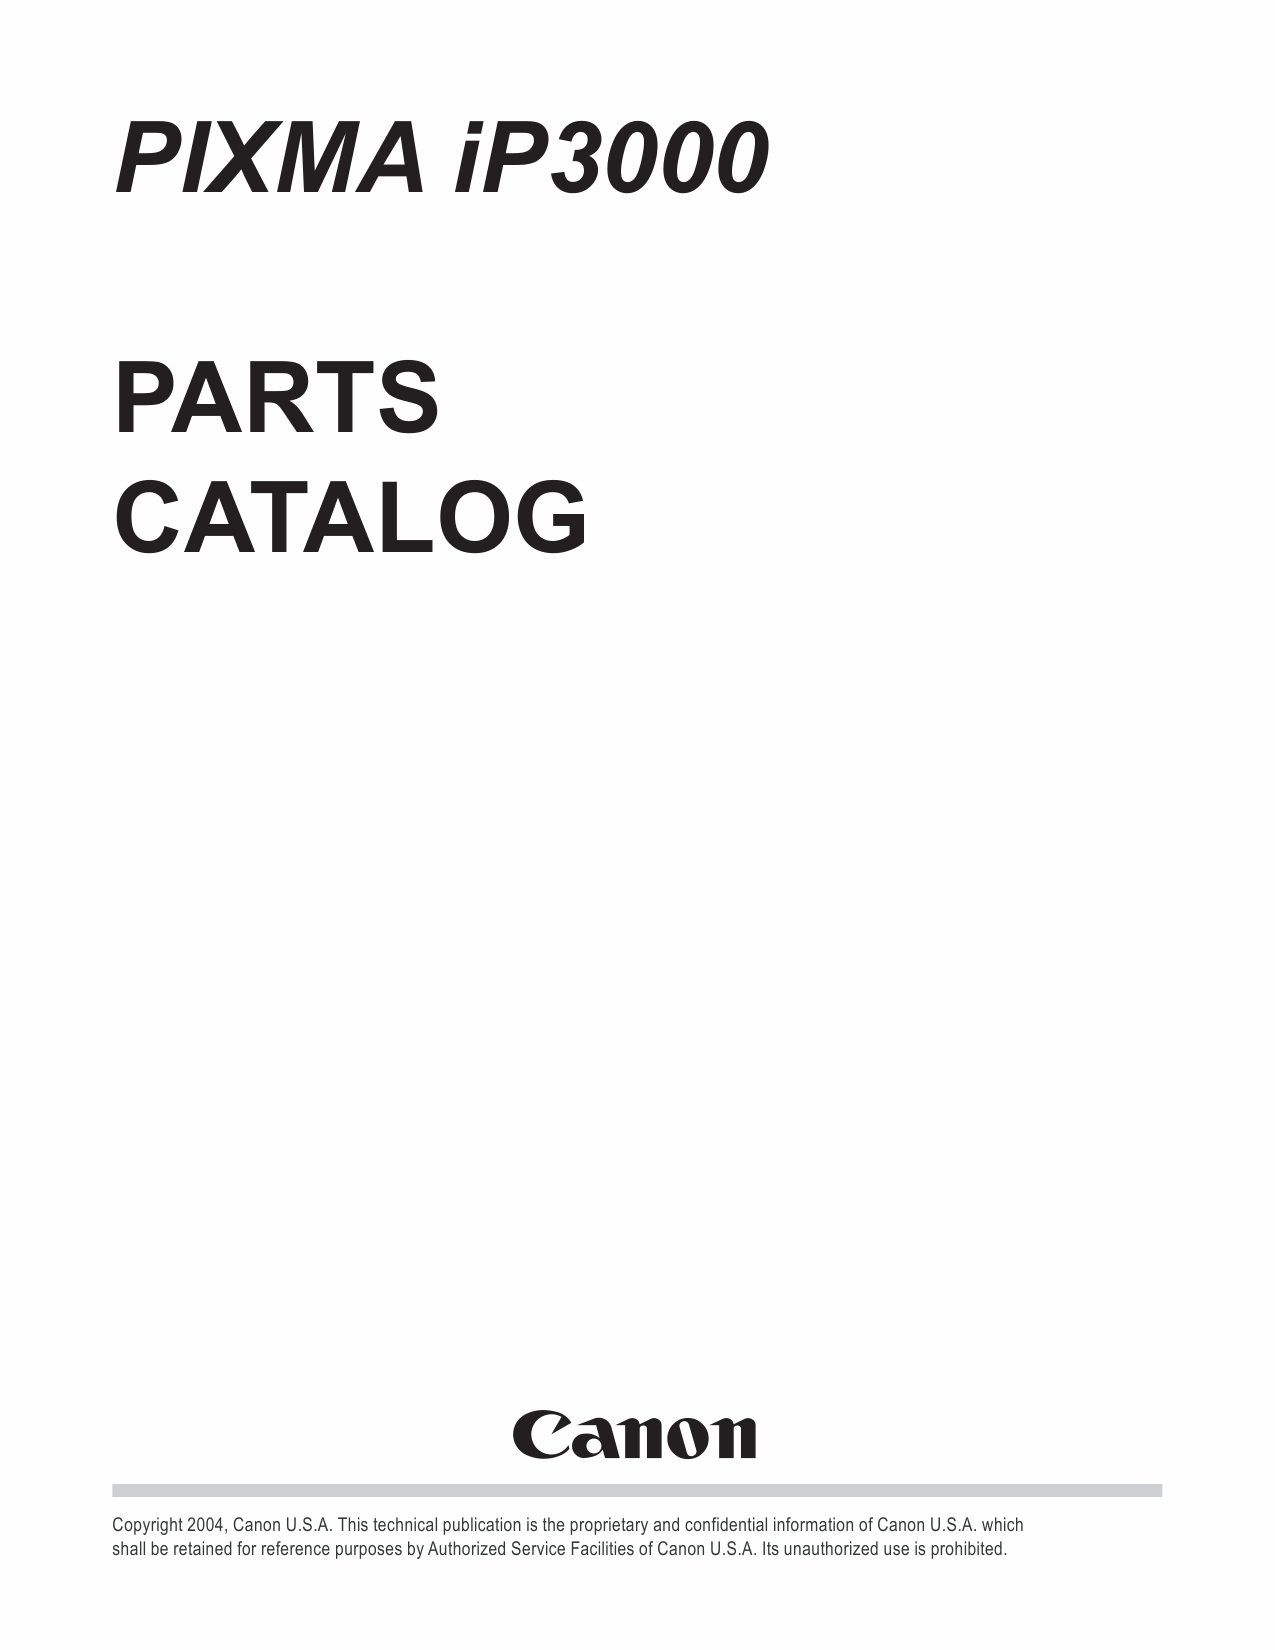 Canon PIXMA iP3000 Parts Catalog-1